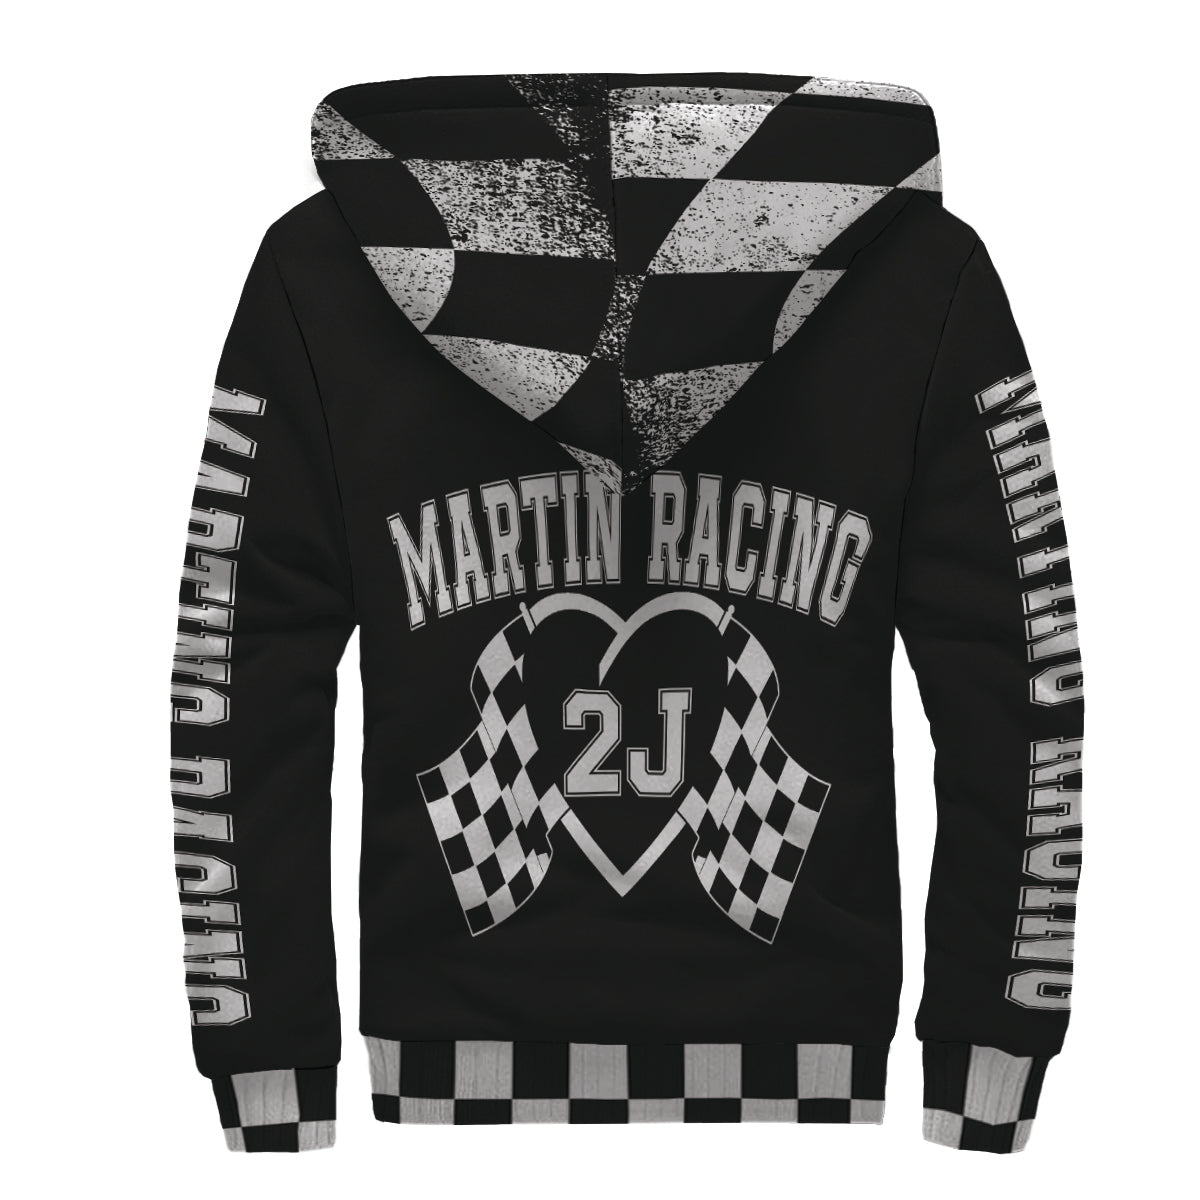 Martin Racing Sherpa Jacket Number 2J